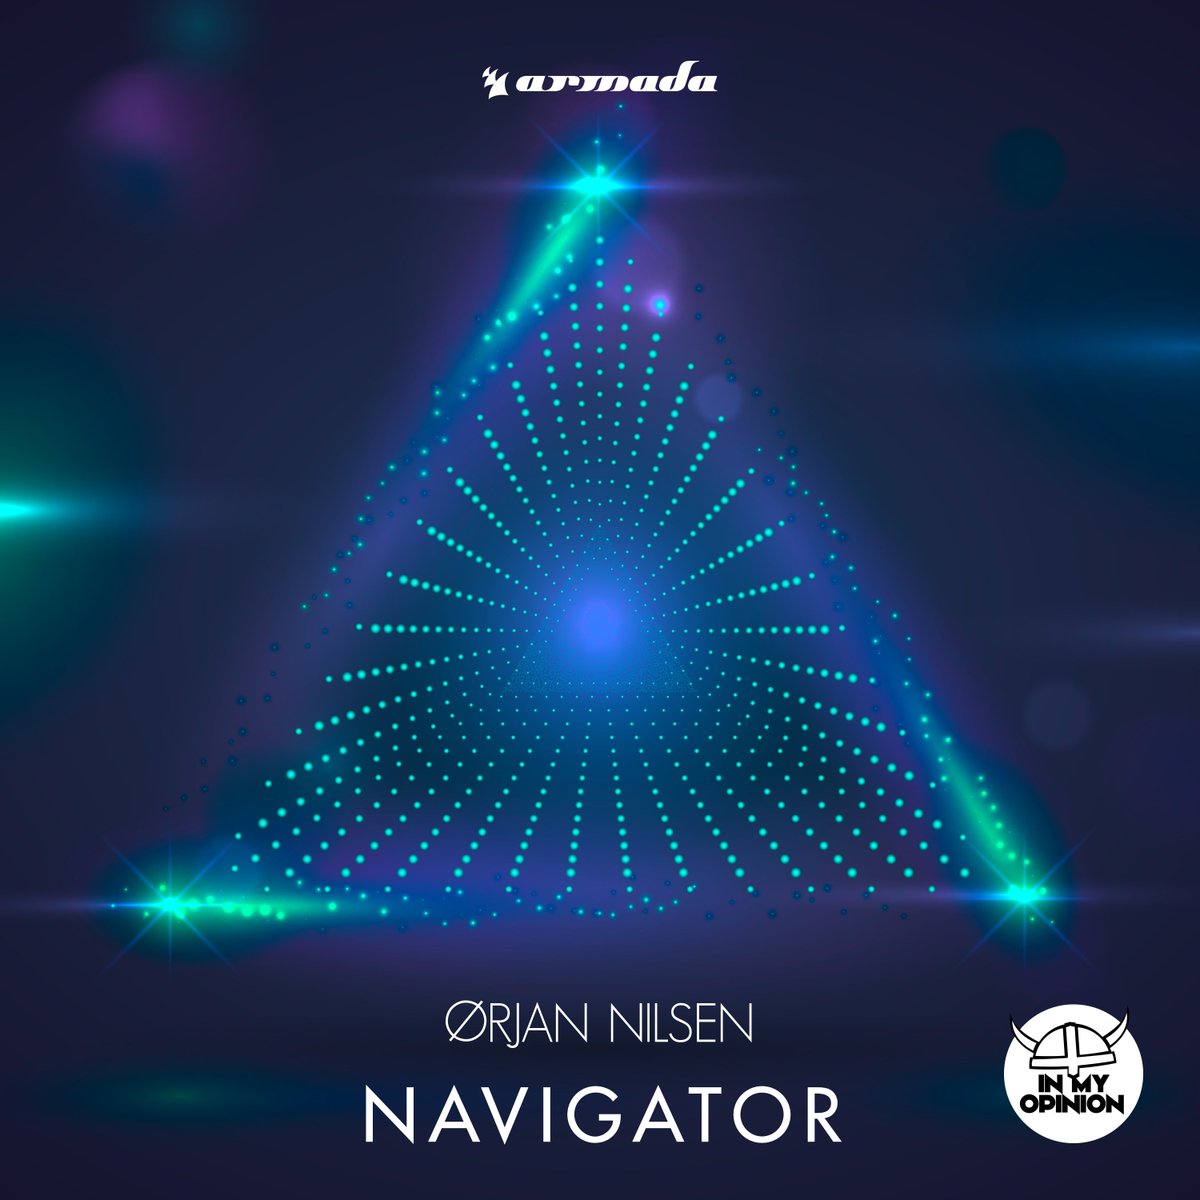 How do you like #Navigator, guys?   Listen here: IMO036.lnk.to/Navigator https://t.co/BeUSajOQvO